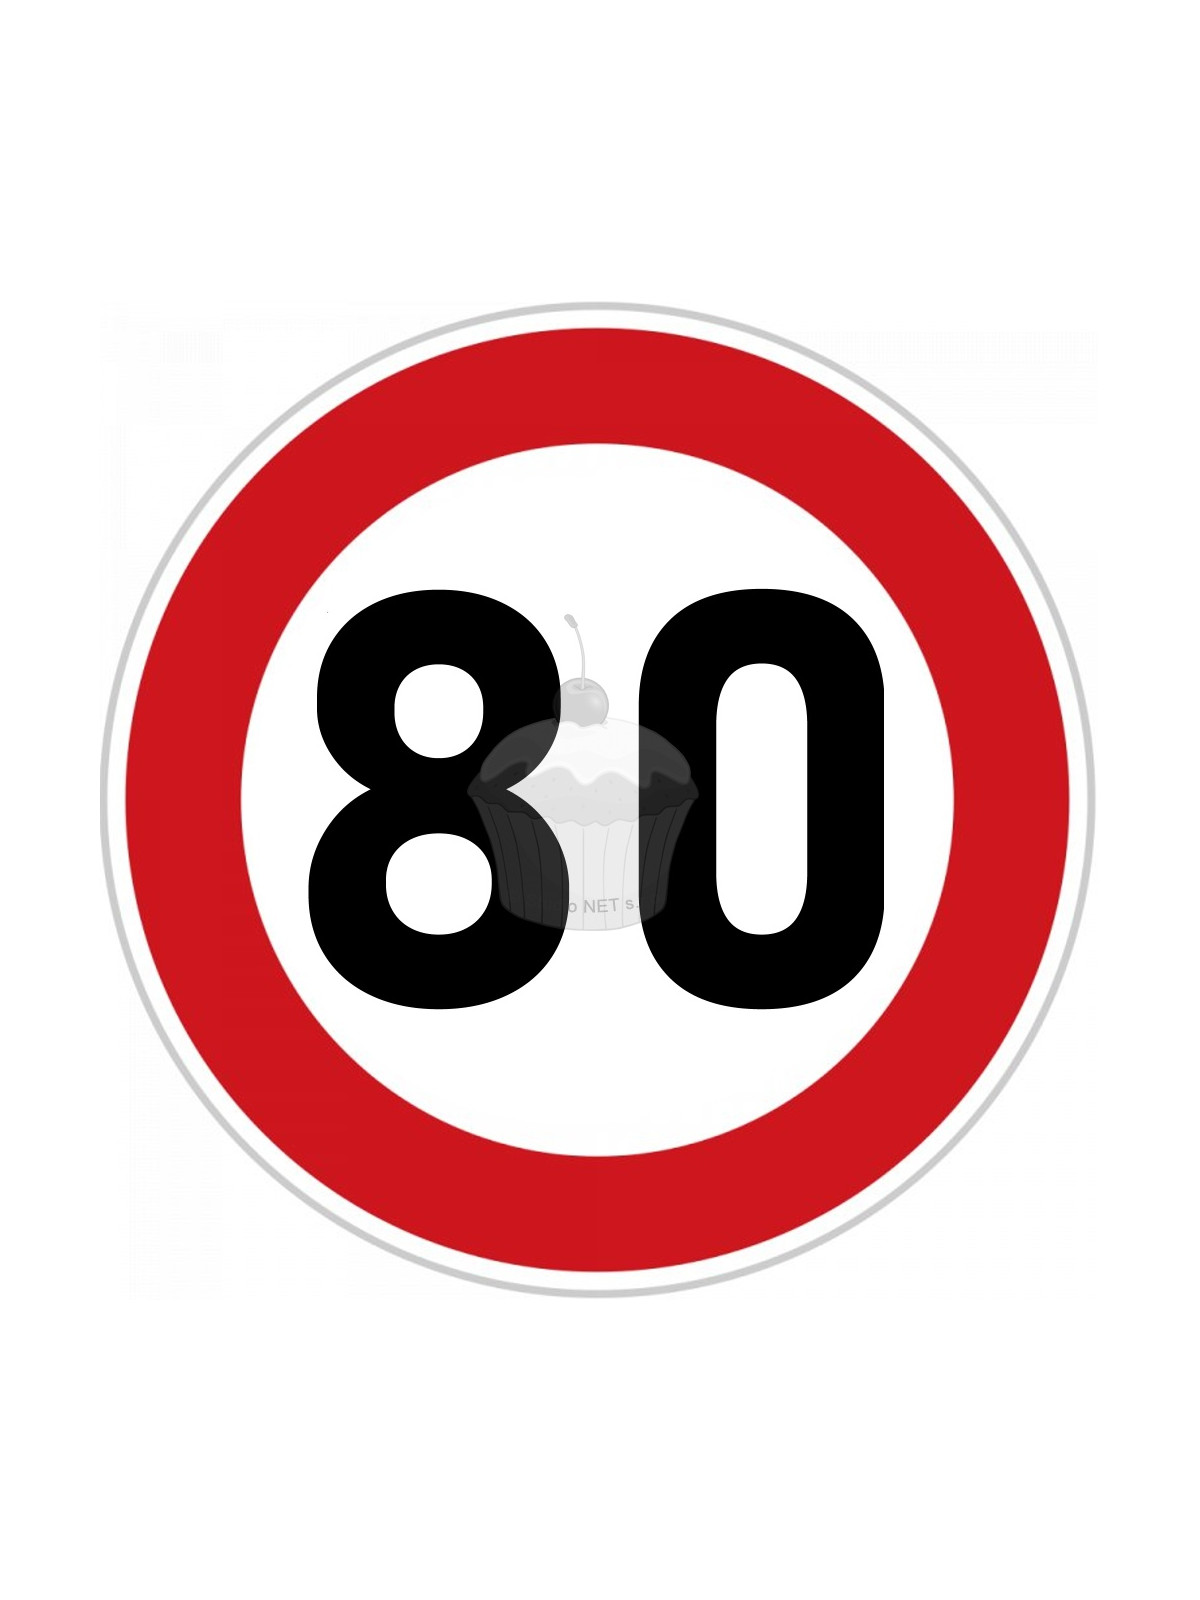 Edible paper "80th Birthday" ban sign A4